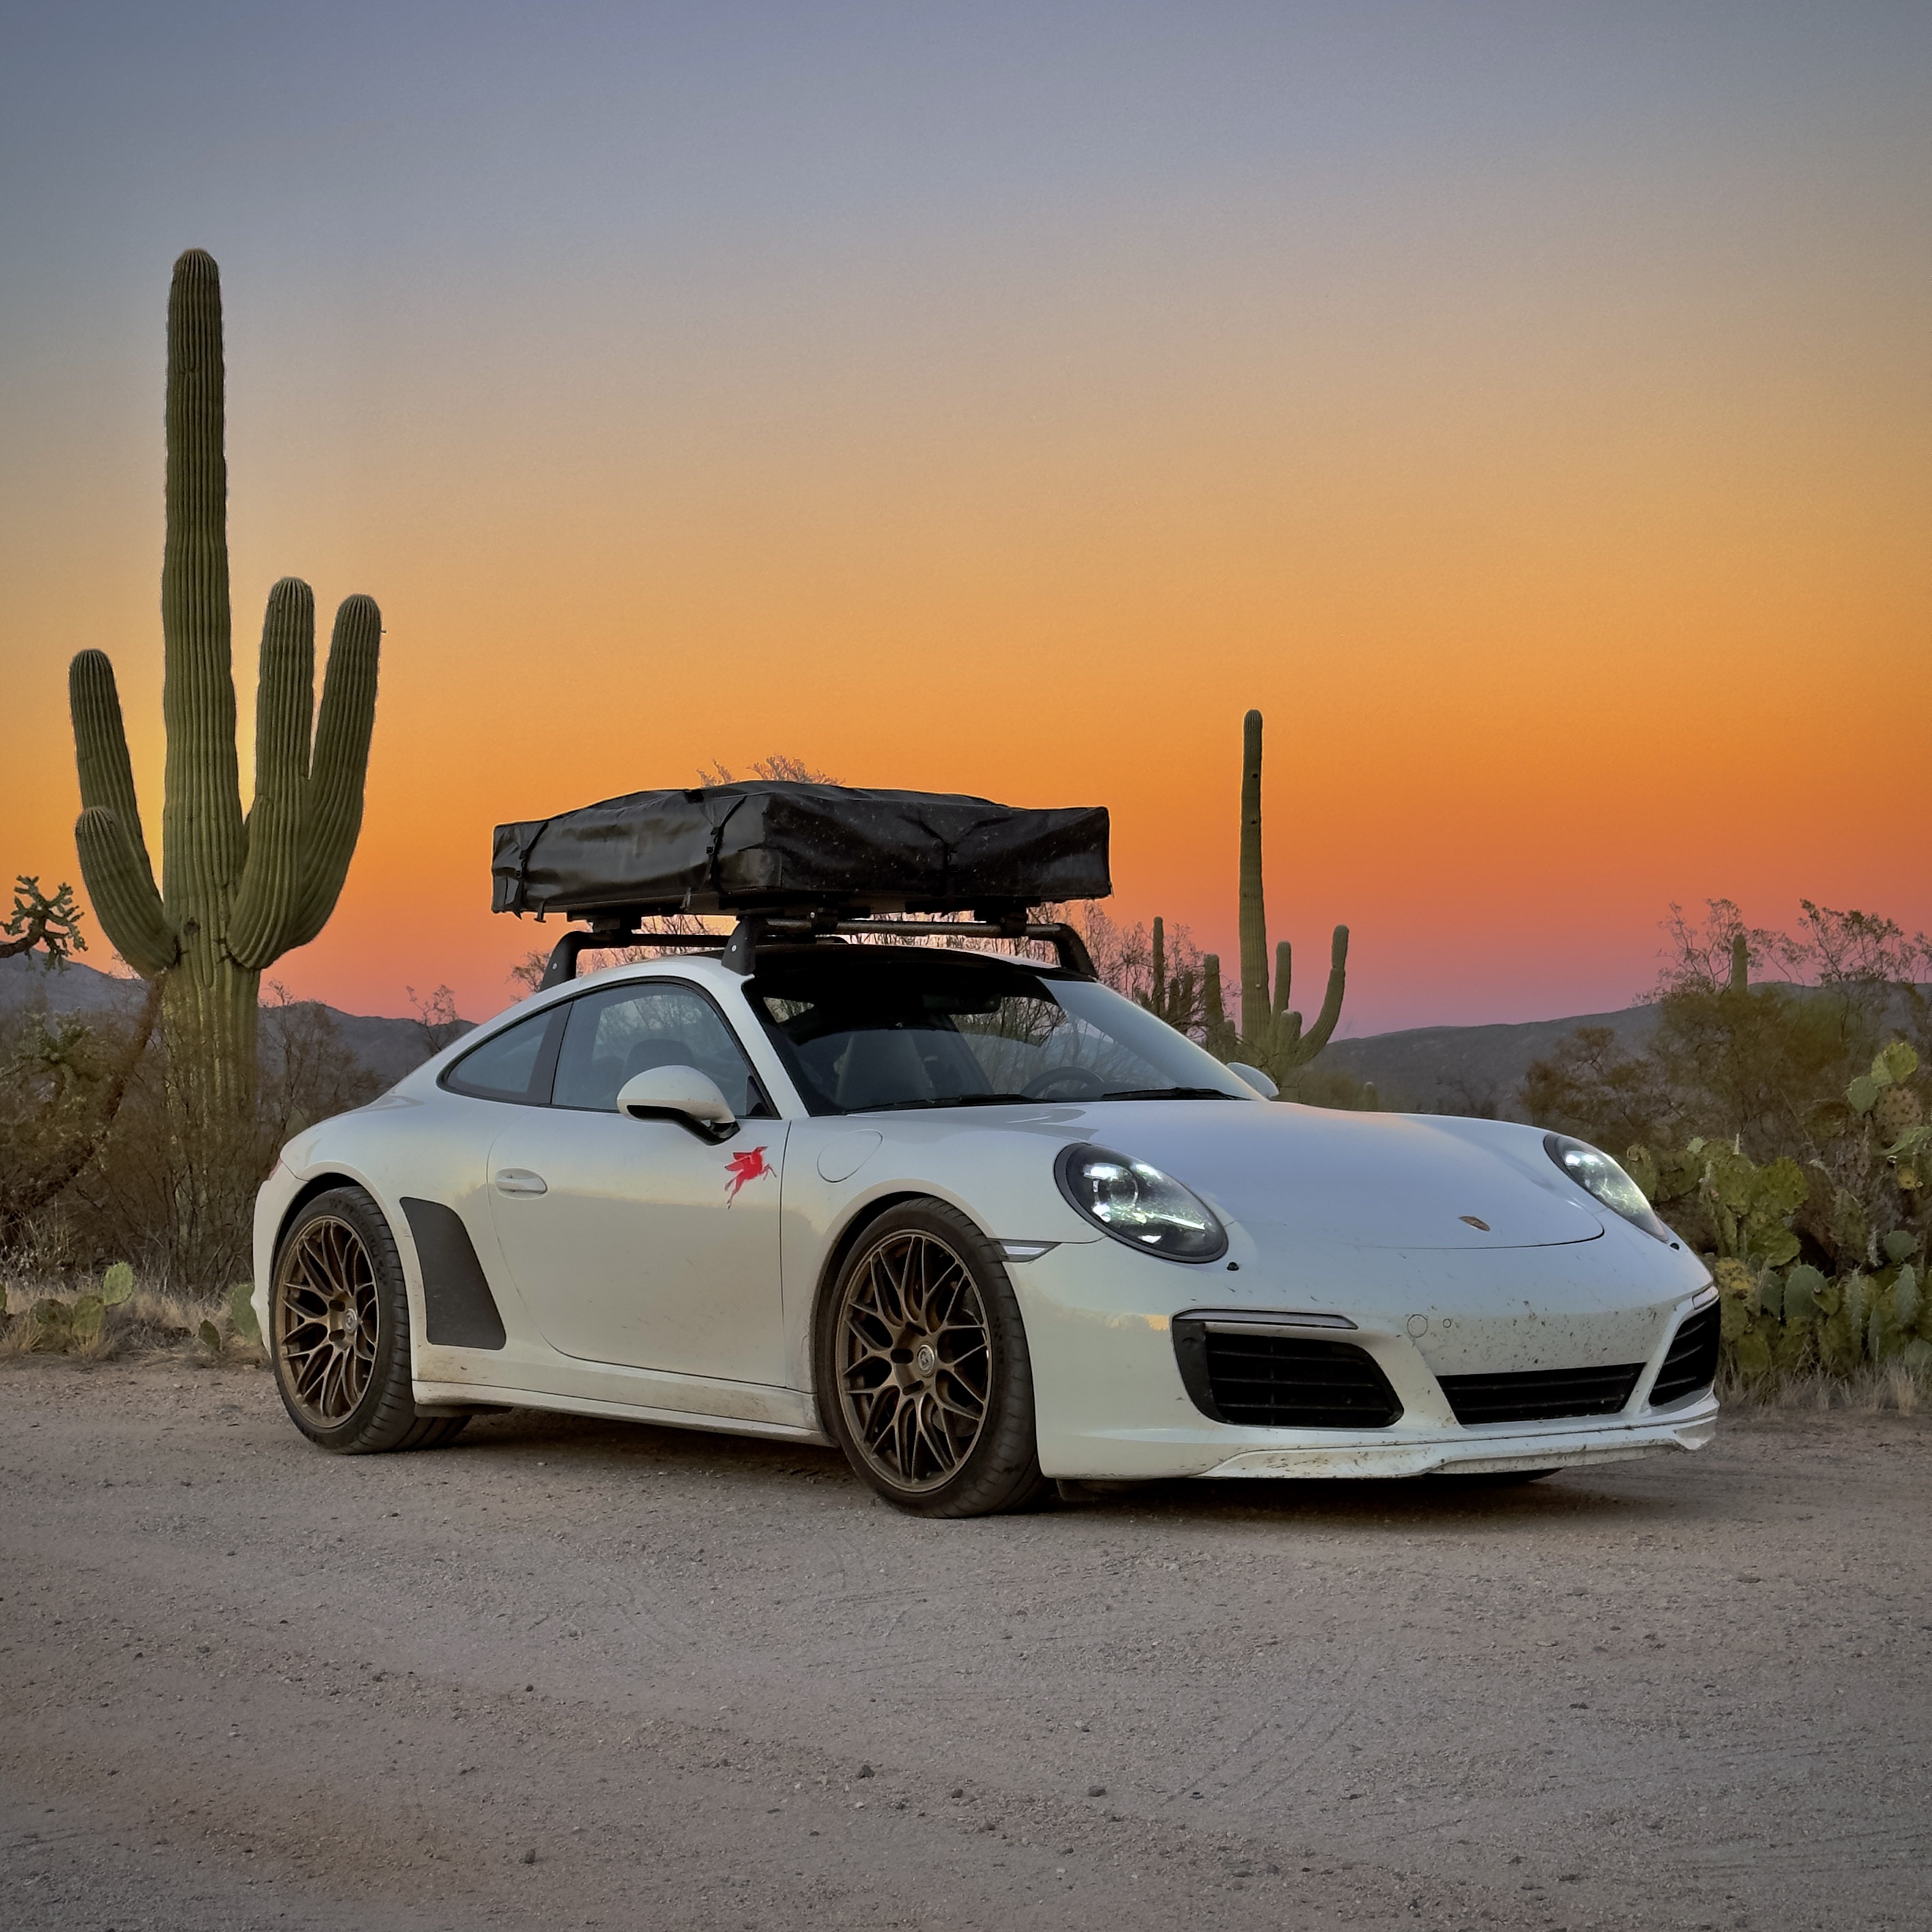 White Porsche 911 Carrera at sunset in the desert